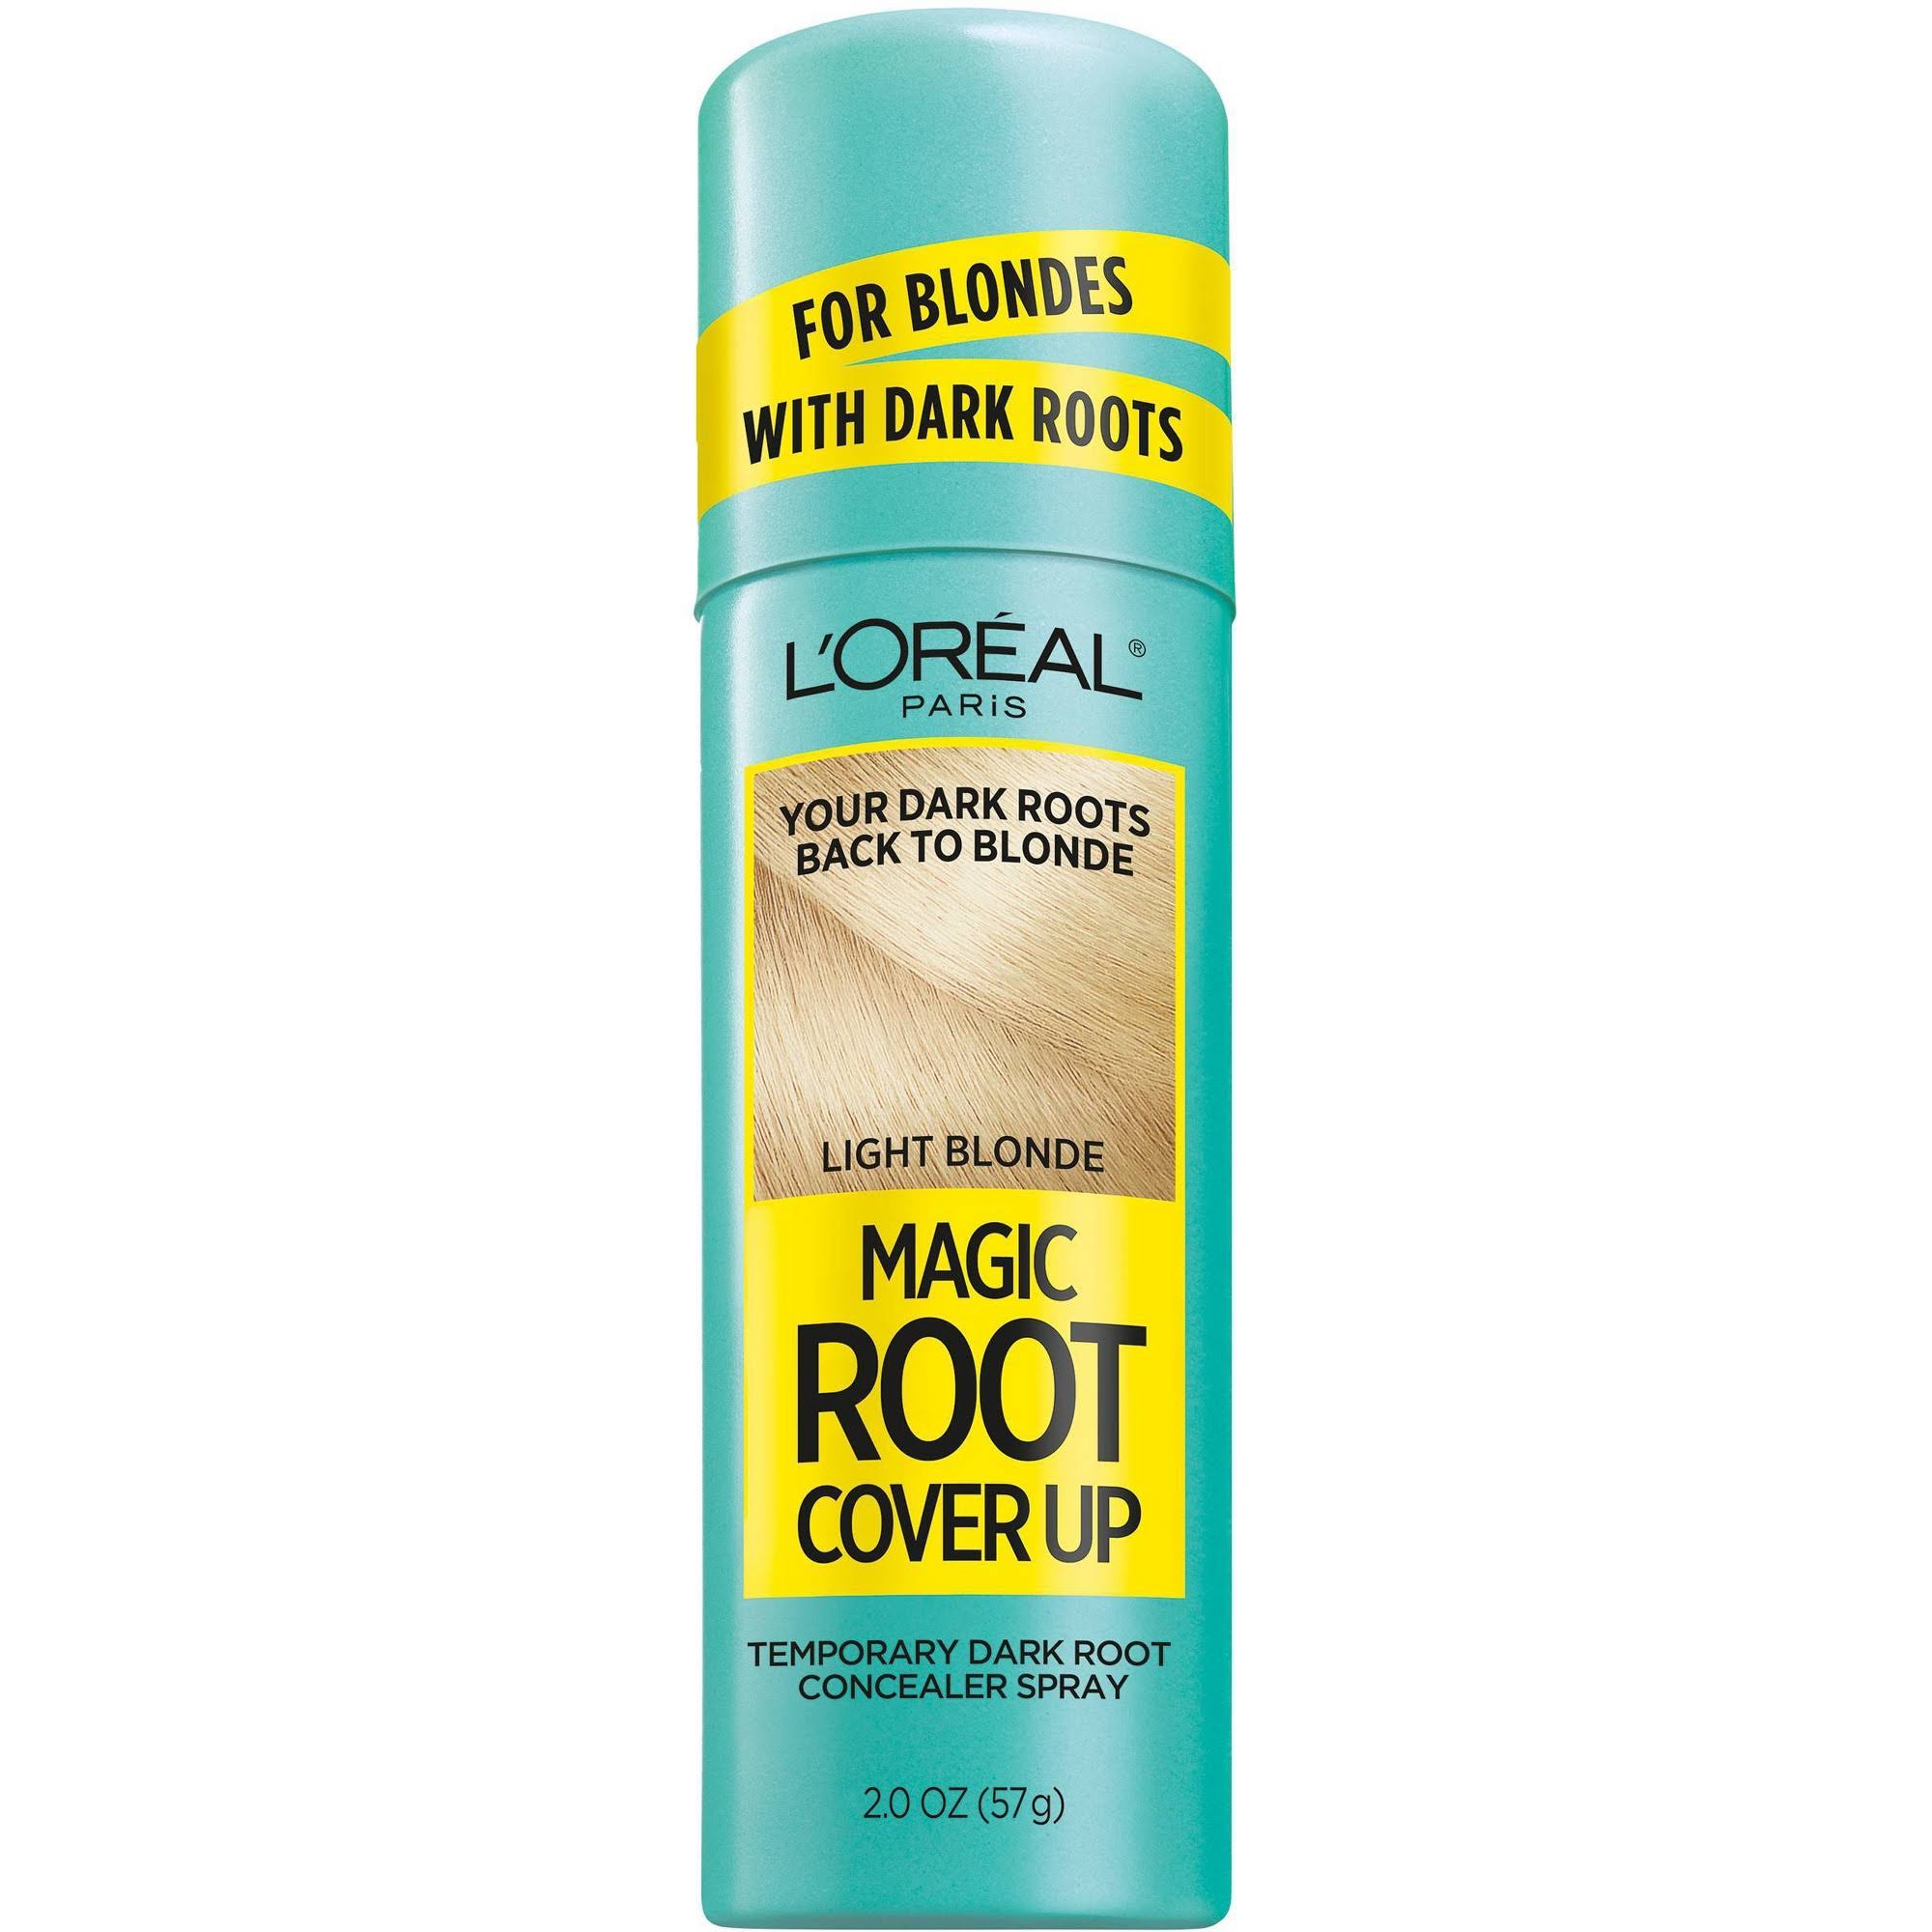 L'Oreal Paris Magic Root Cover Up Temporary Dark Root Concealer Spray, Light Blonde